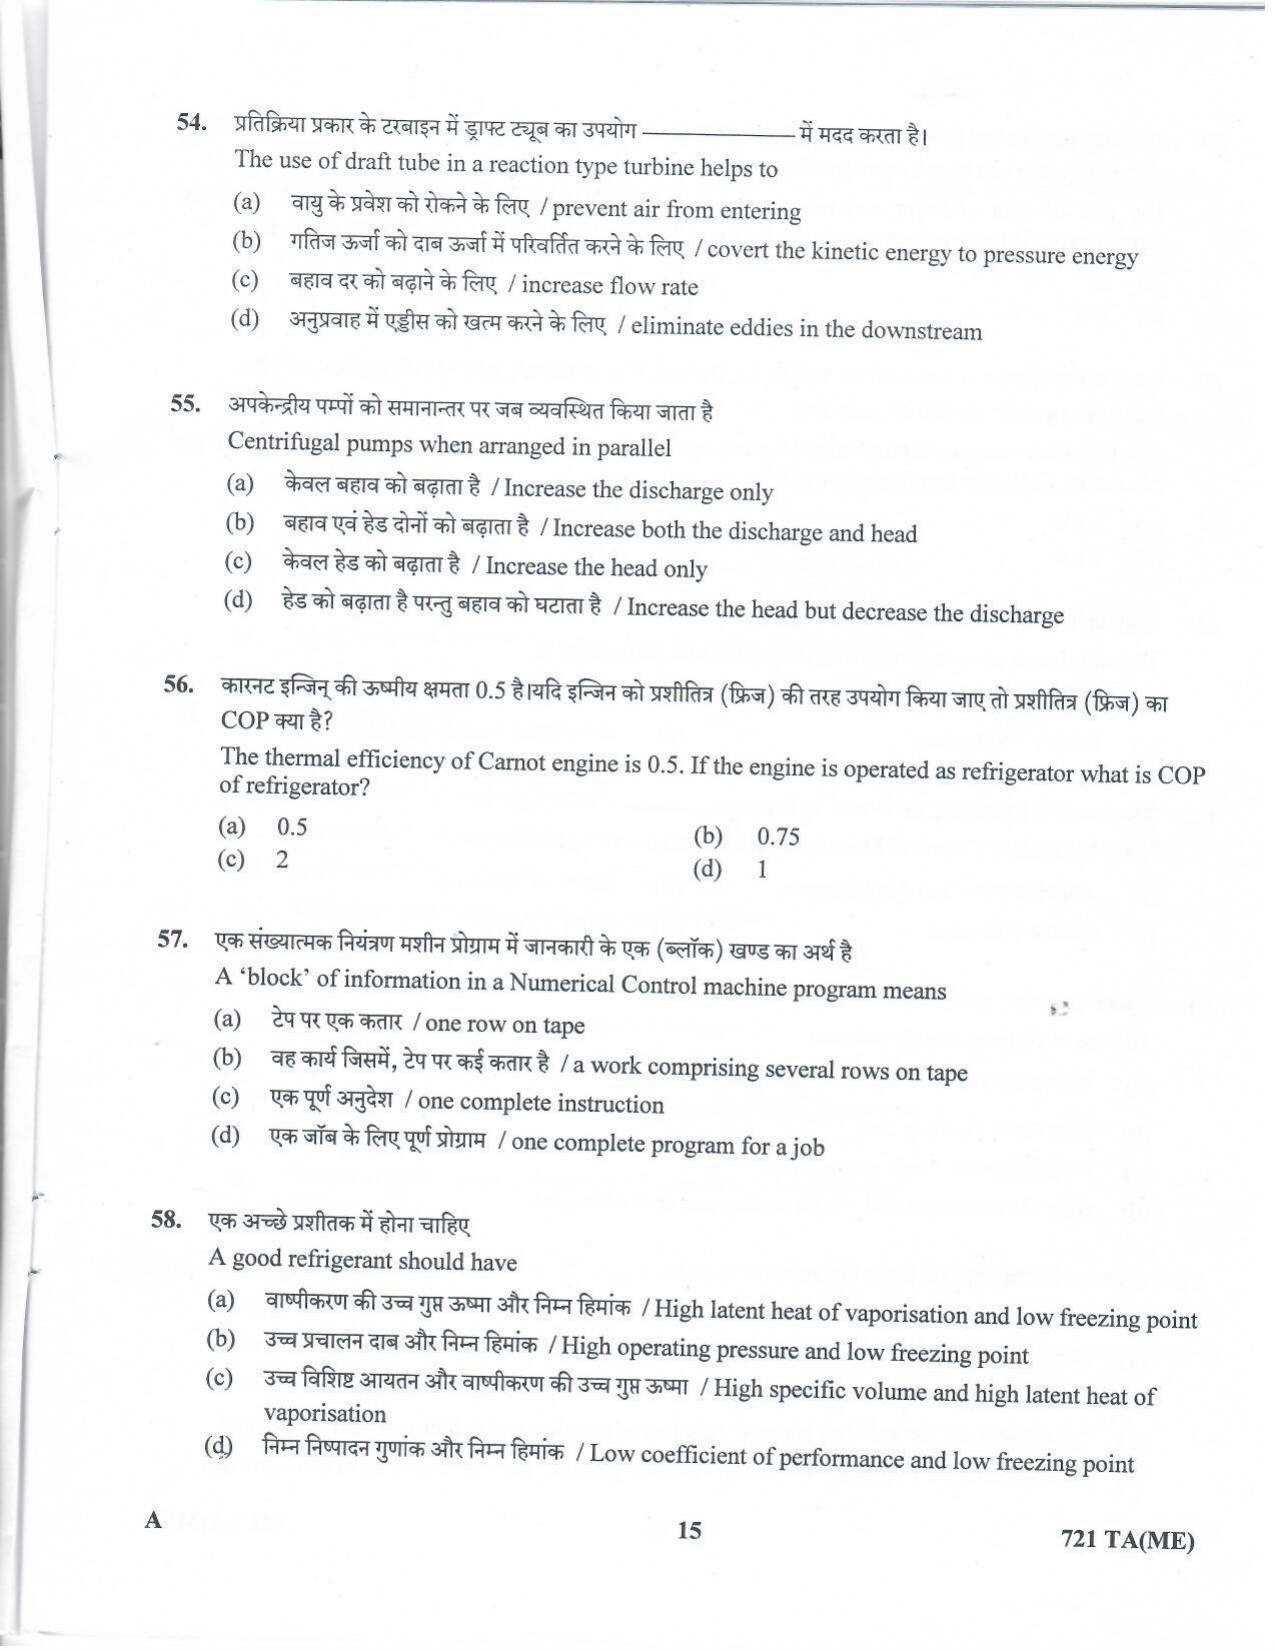 LPSC Technical Assistant (Mechanical) 2020 Question Paper - Page 14